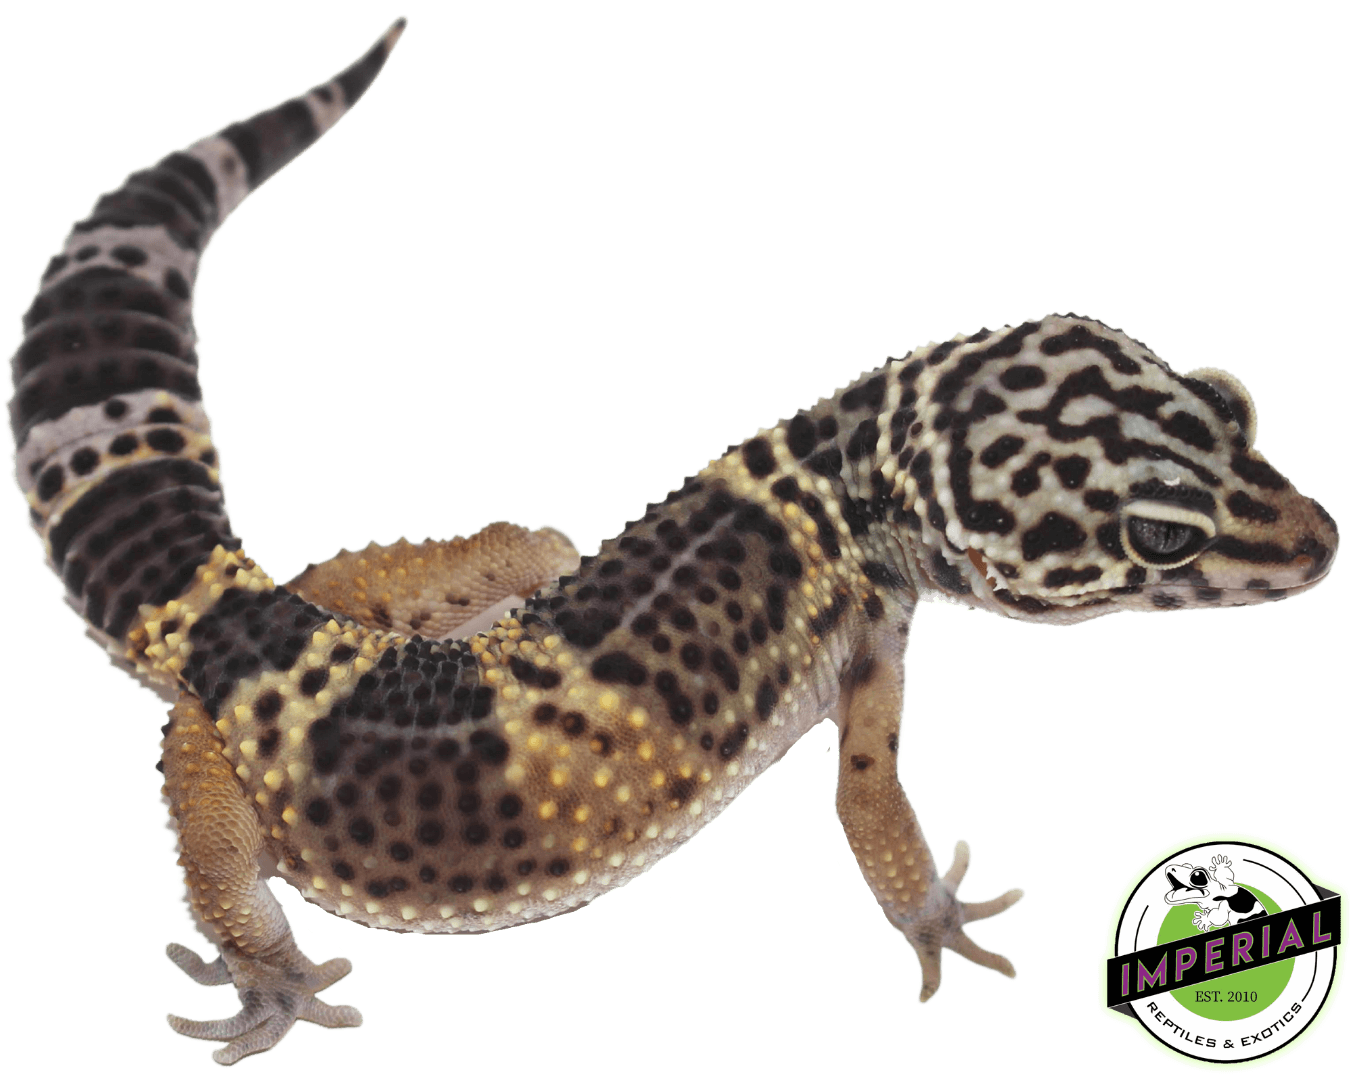 black knight leopard gecko for sale, buy reptiles online